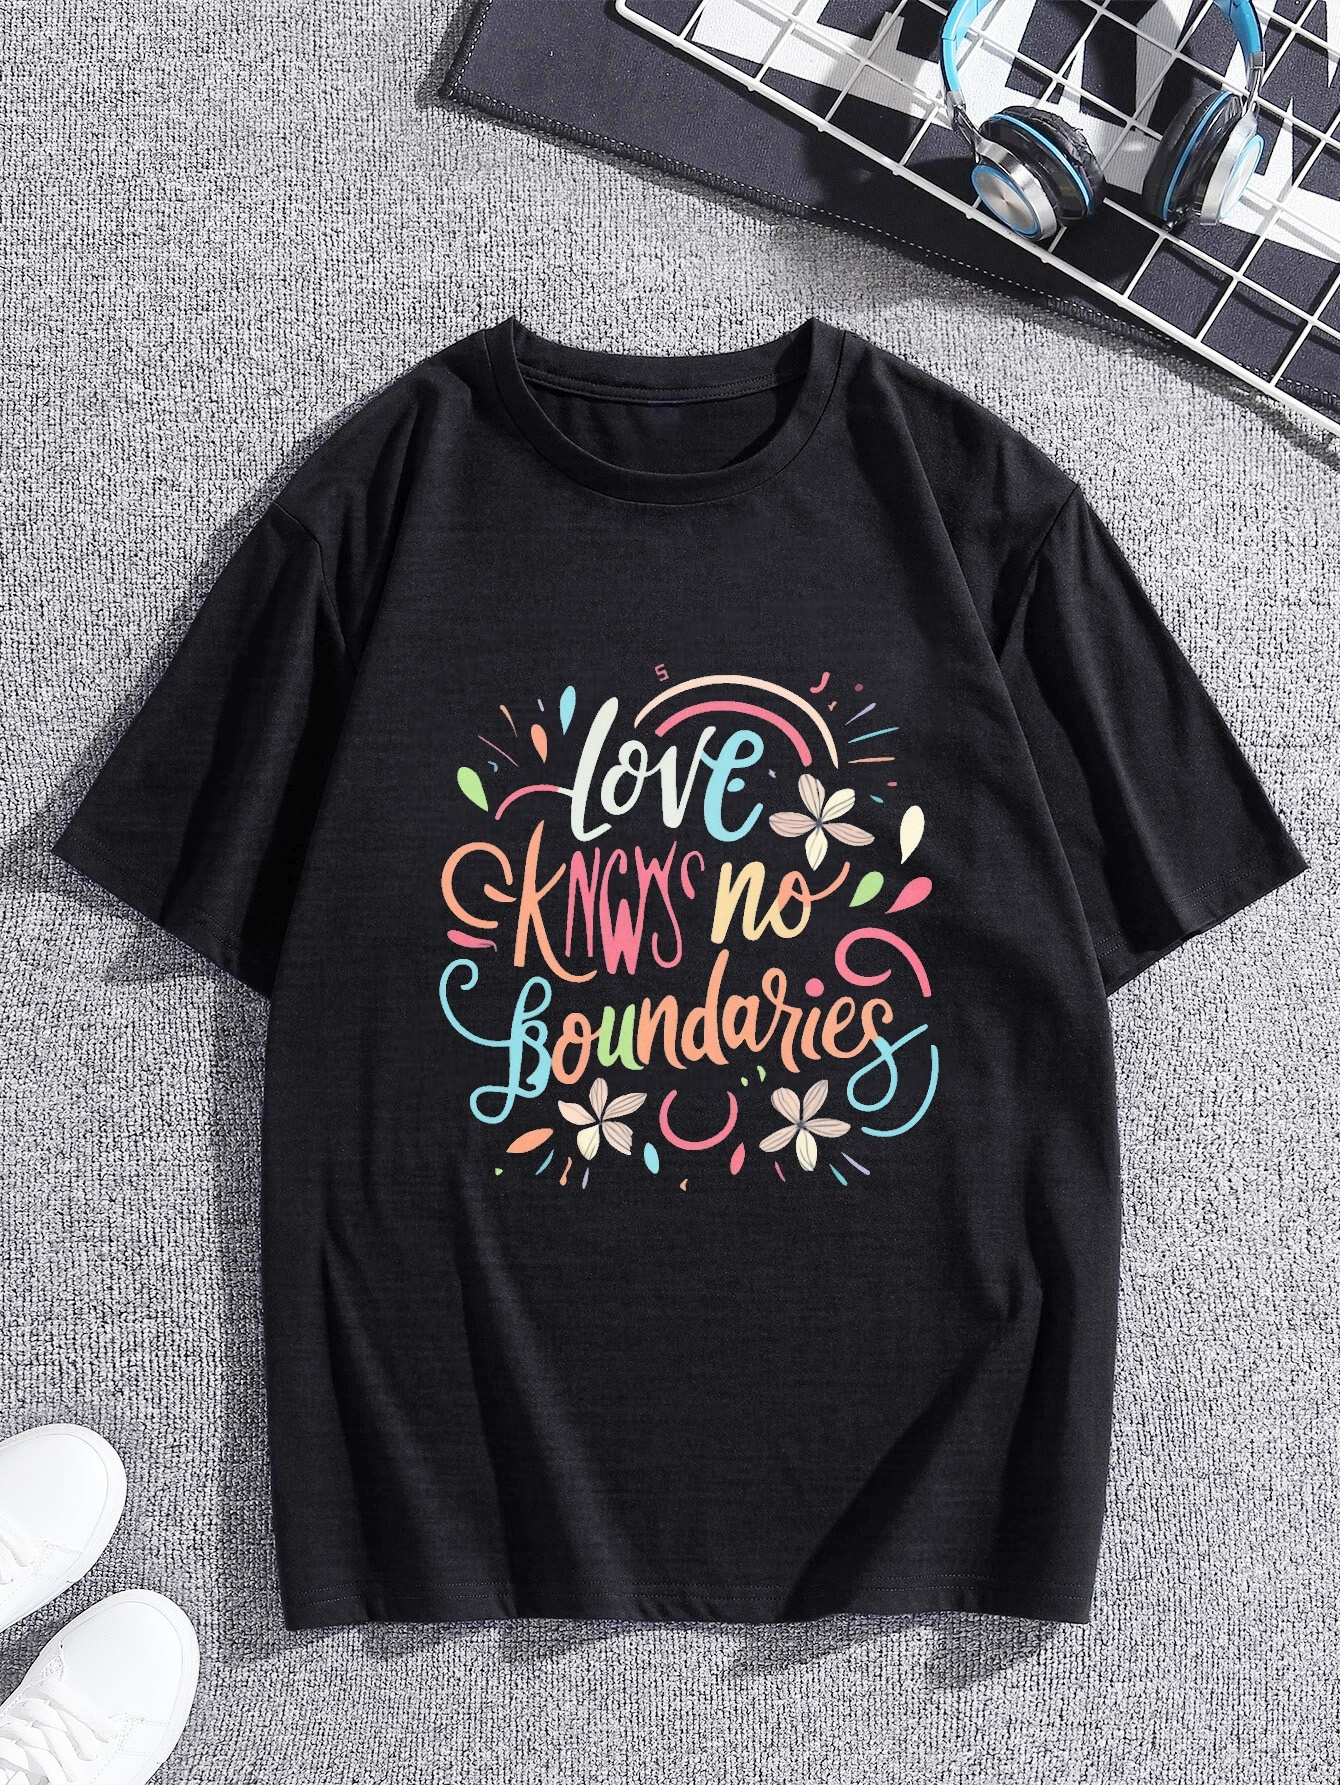 No Boundaries T-Shirts & T-Shirt Designs